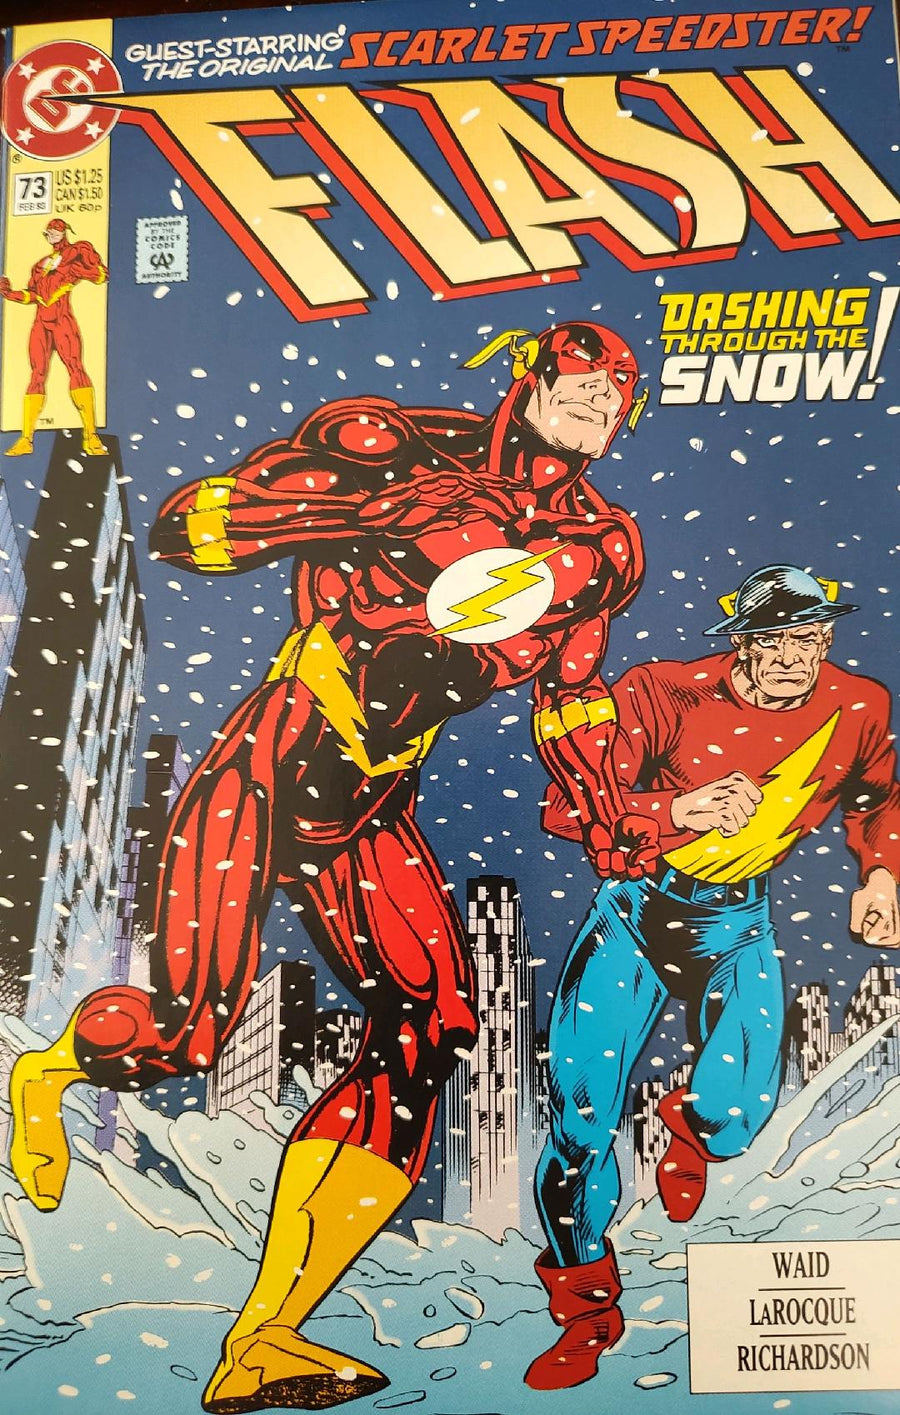 Flash #73 Vol 2 Comic Book Cover